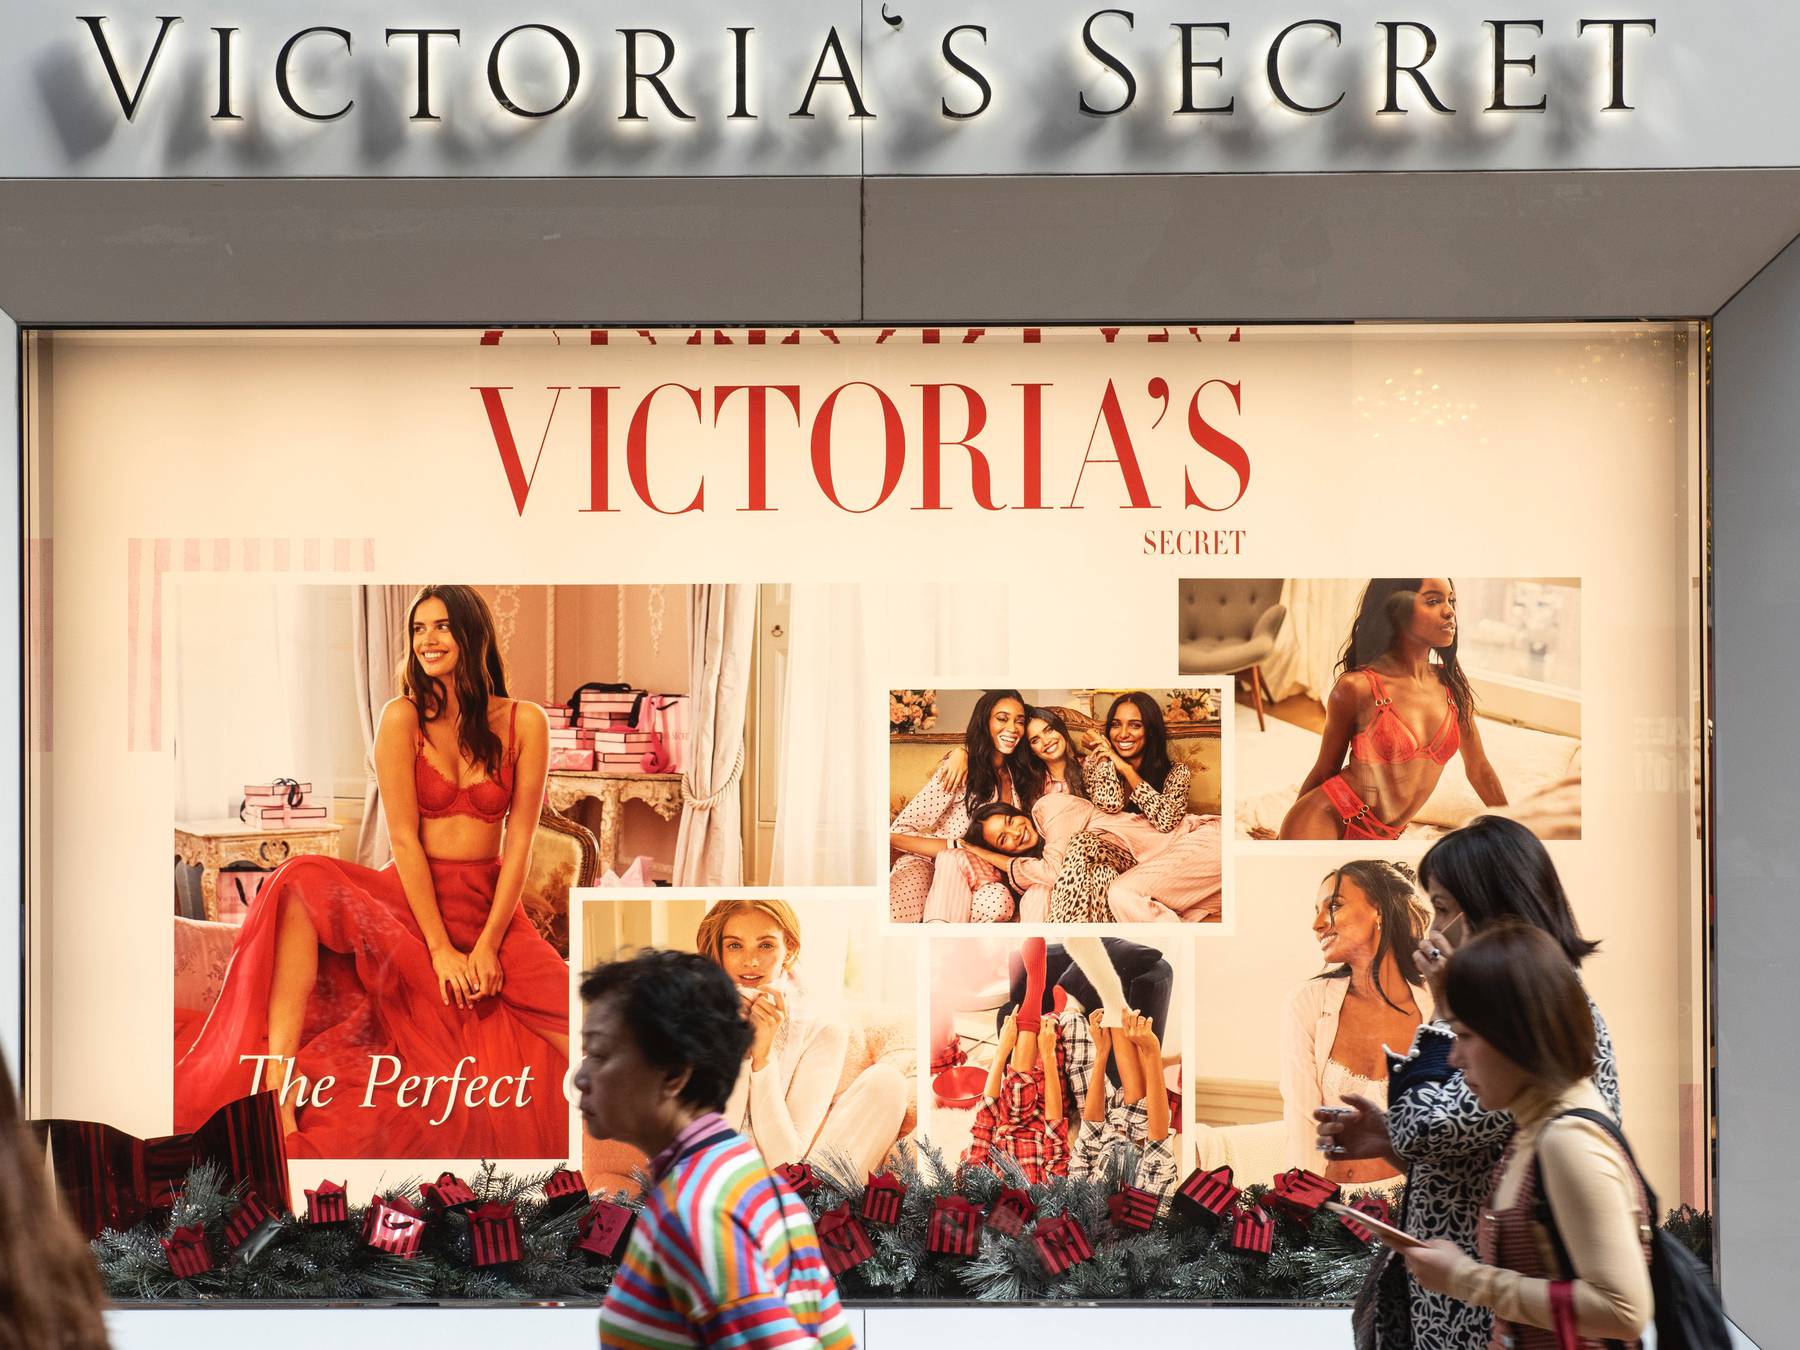 Is the Victoria's Secret Rebrand Dead on Arrival? A Lingerie